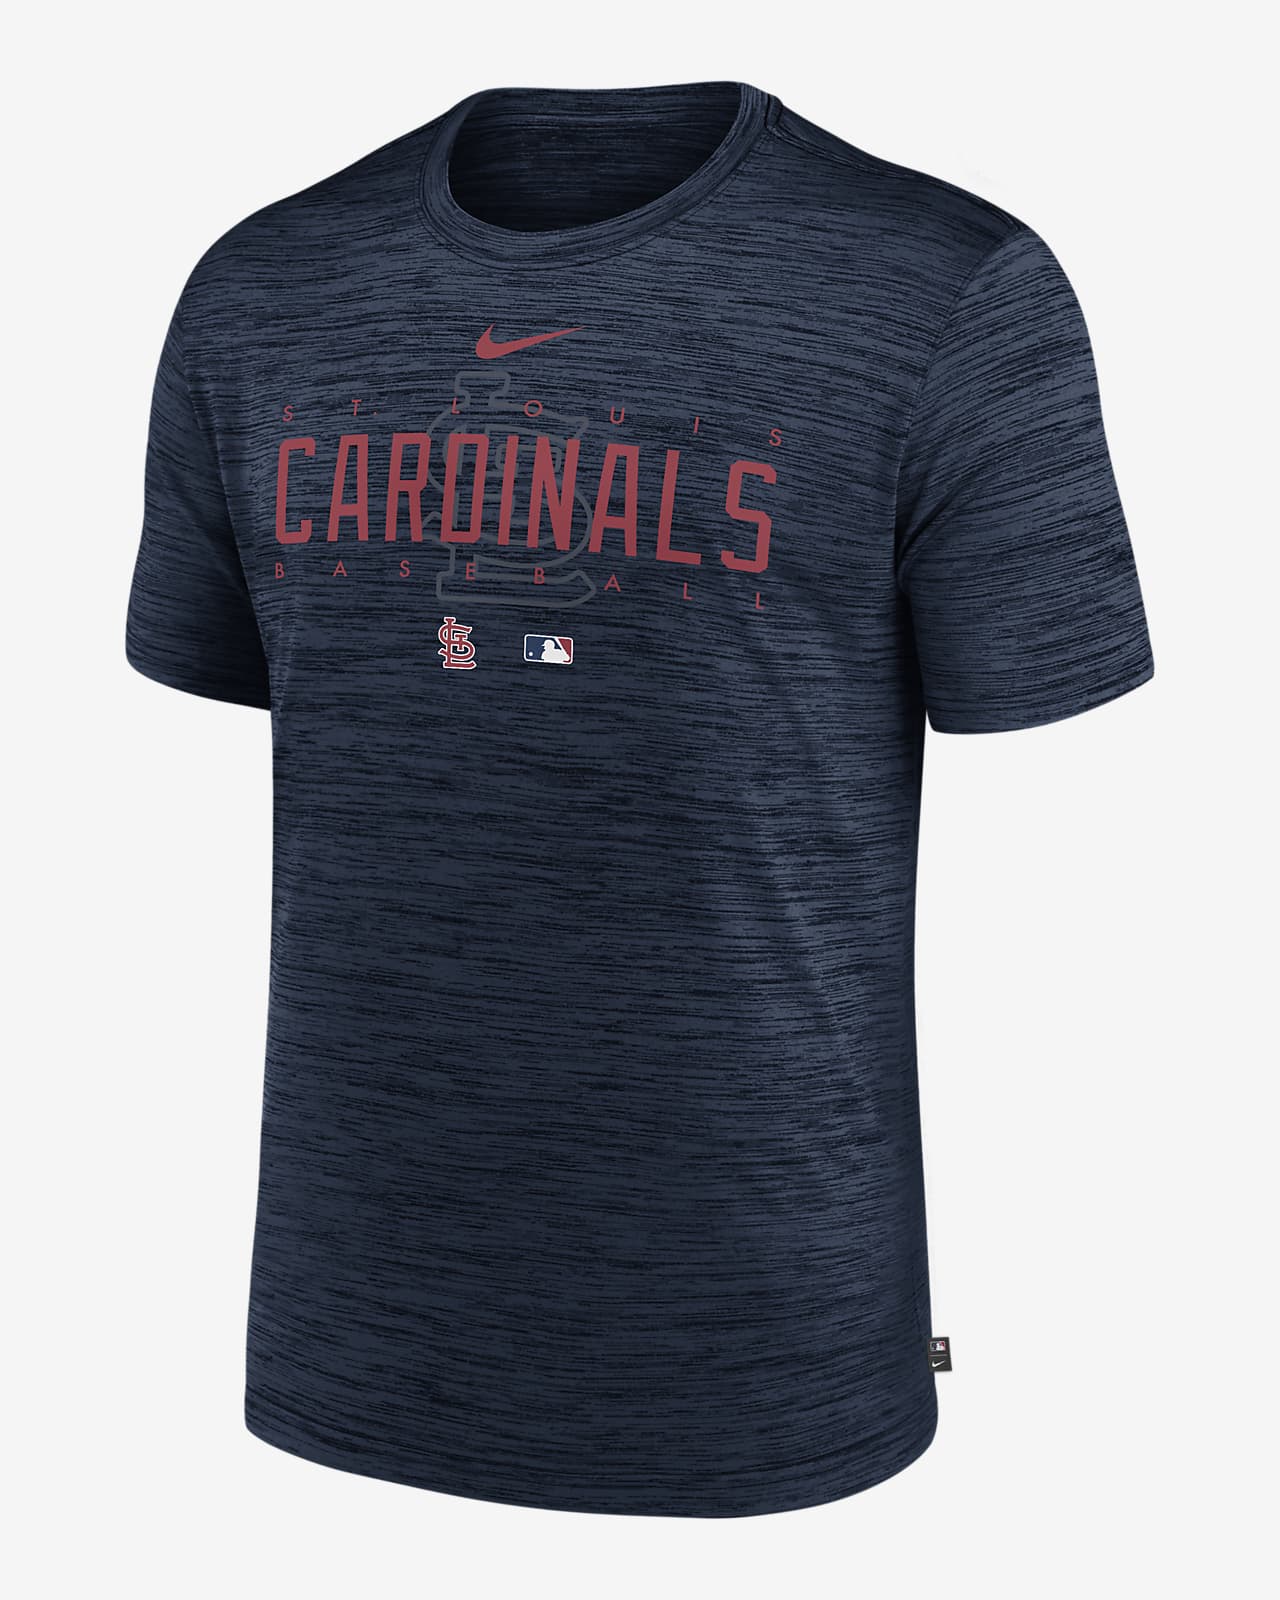 Nike Velocity Team (MLB St. Louis Cardinals) Men's T-Shirt